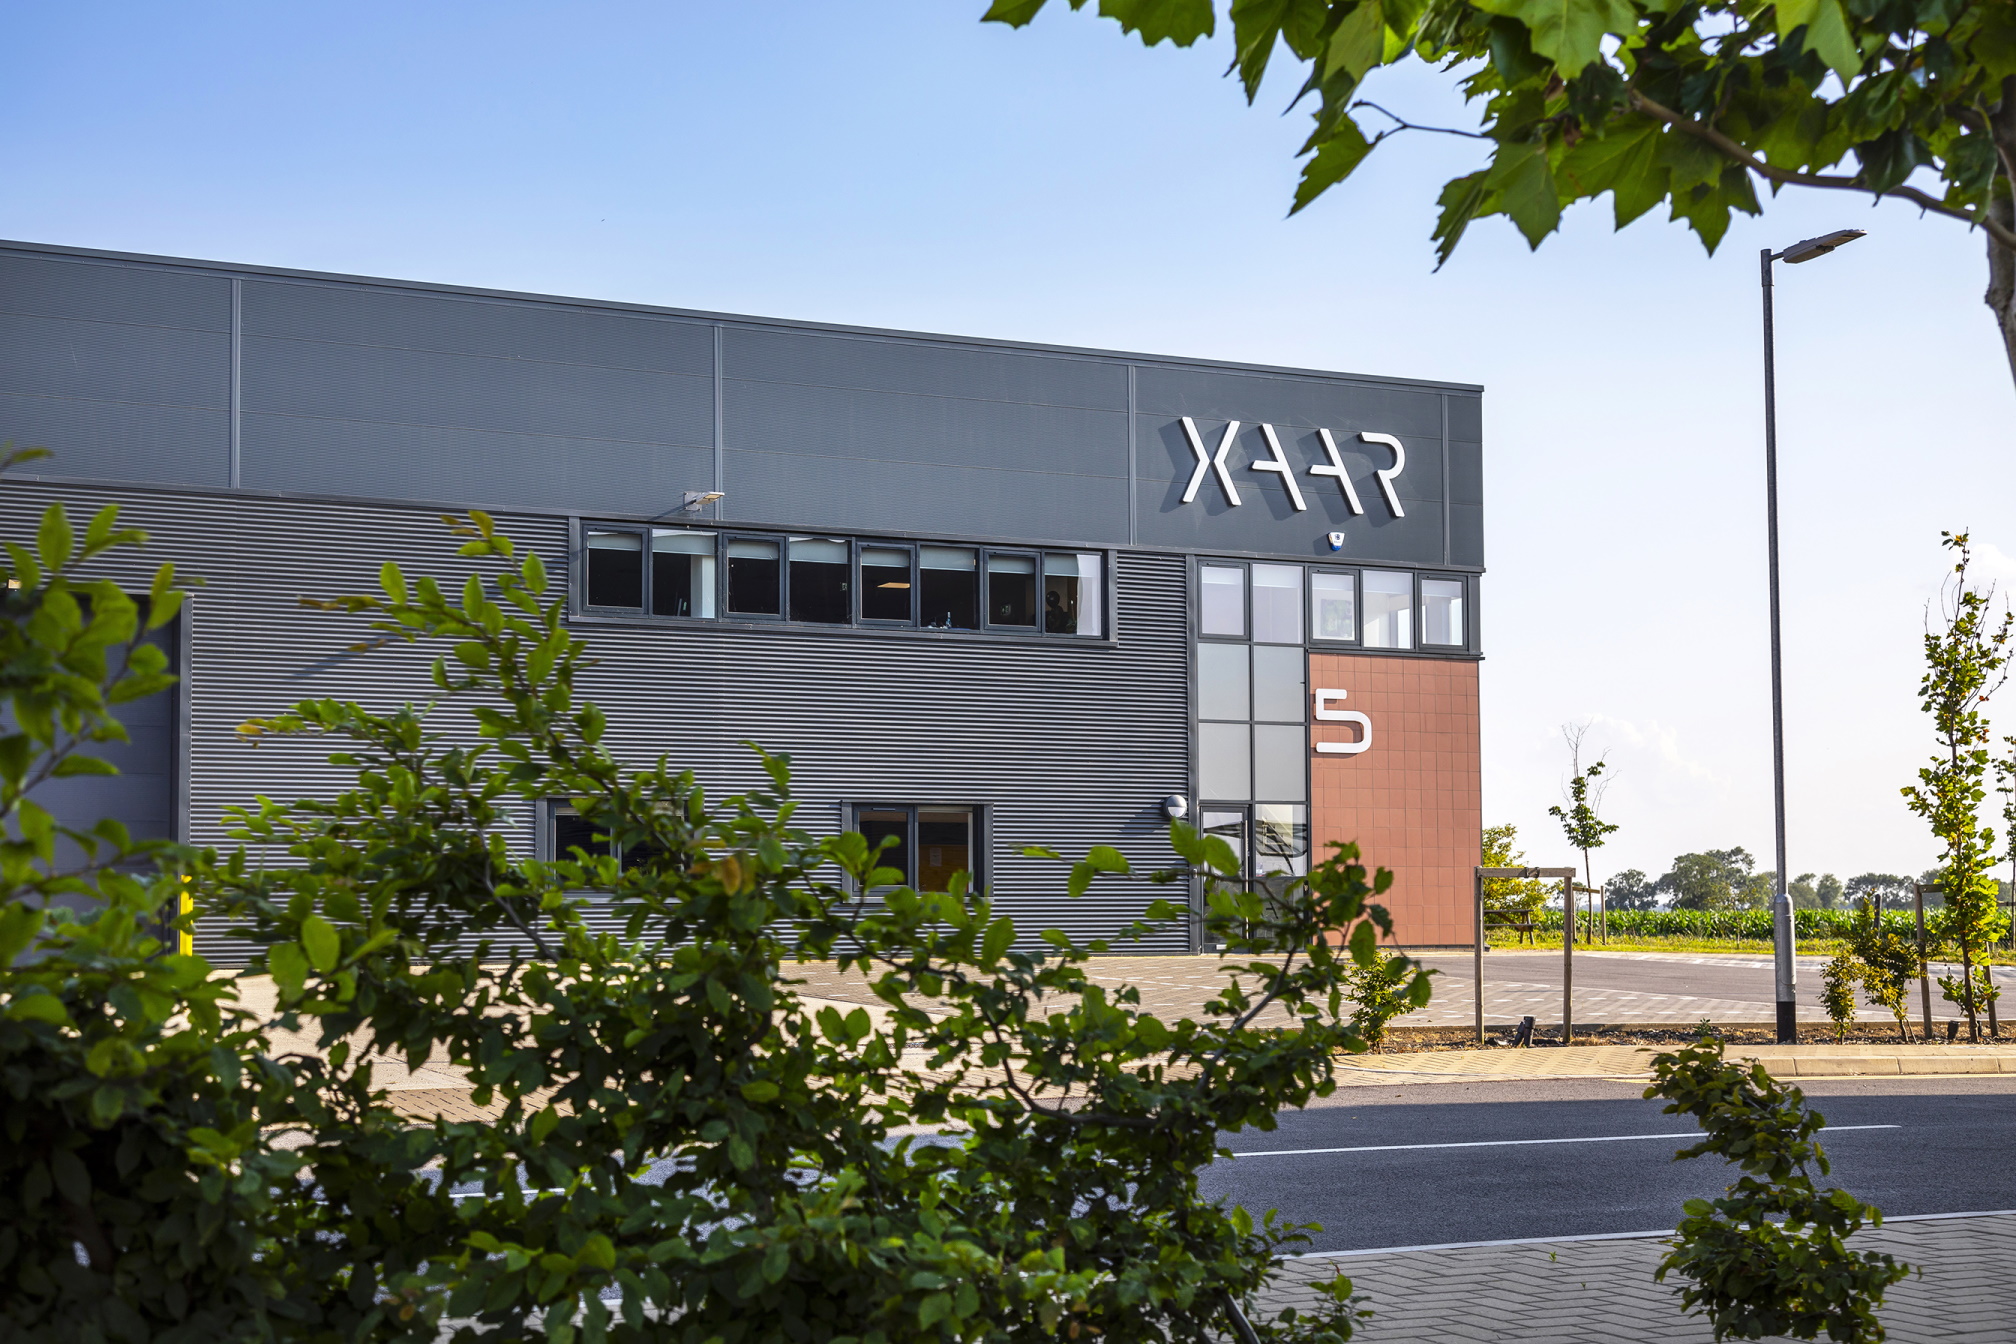 Xaar's new global headquarters in Cambridgeshire. Photo via Xaar.